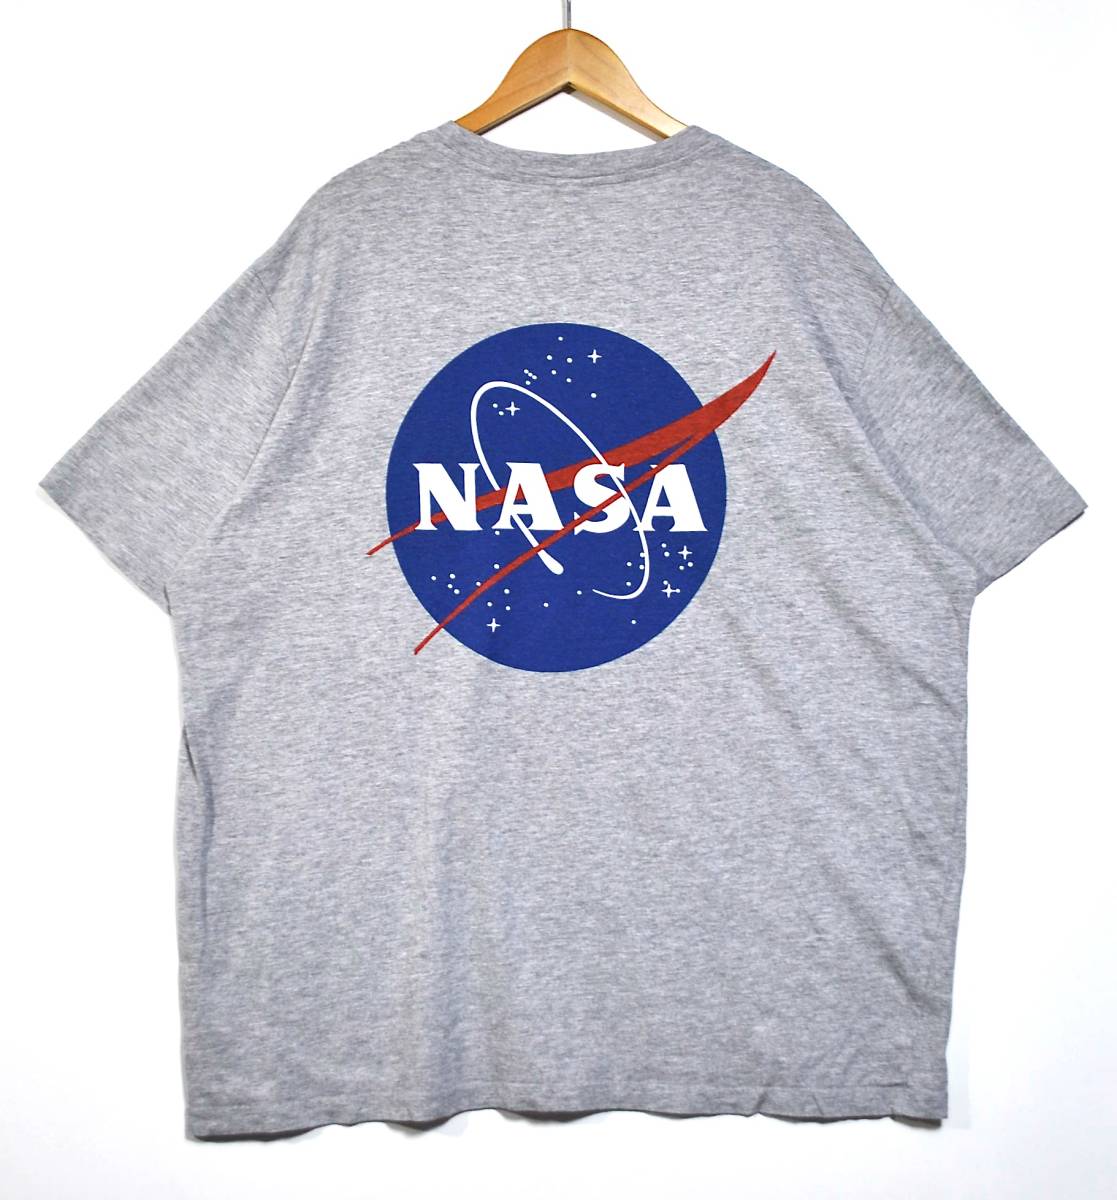 [H&M] H and M NASA большой размер футболка серый XL б/у одежда хорошая вещь 